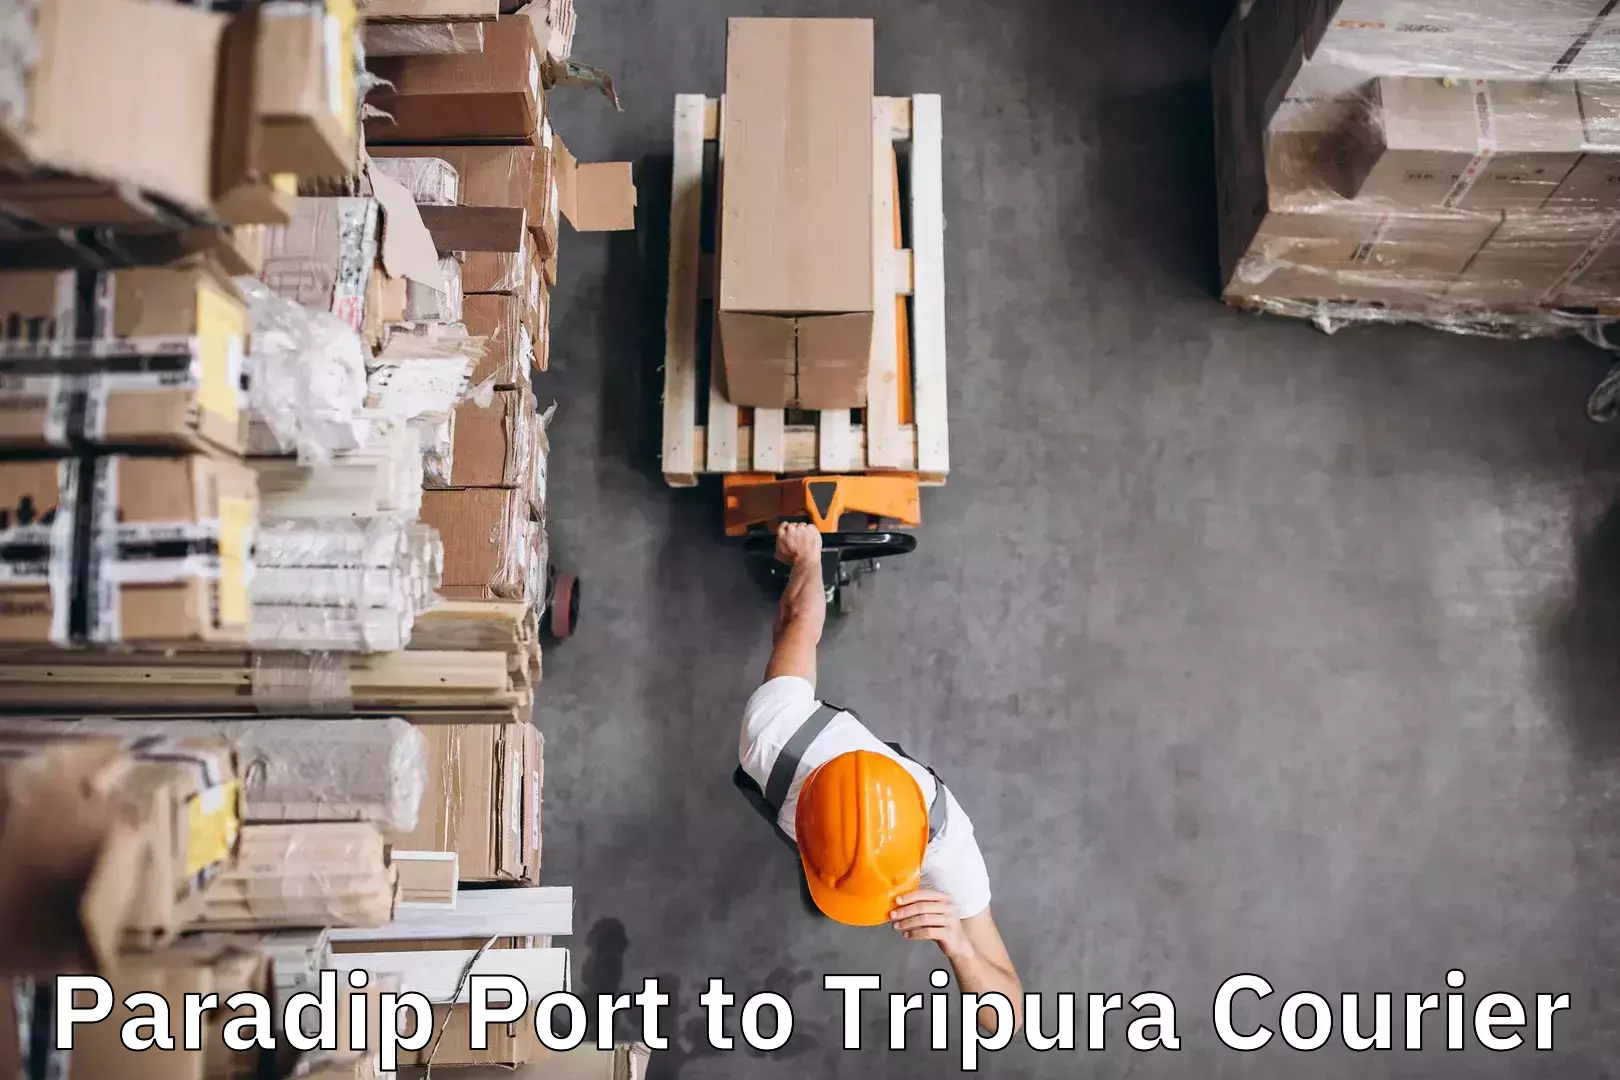 Luggage dispatch service Paradip Port to South Tripura